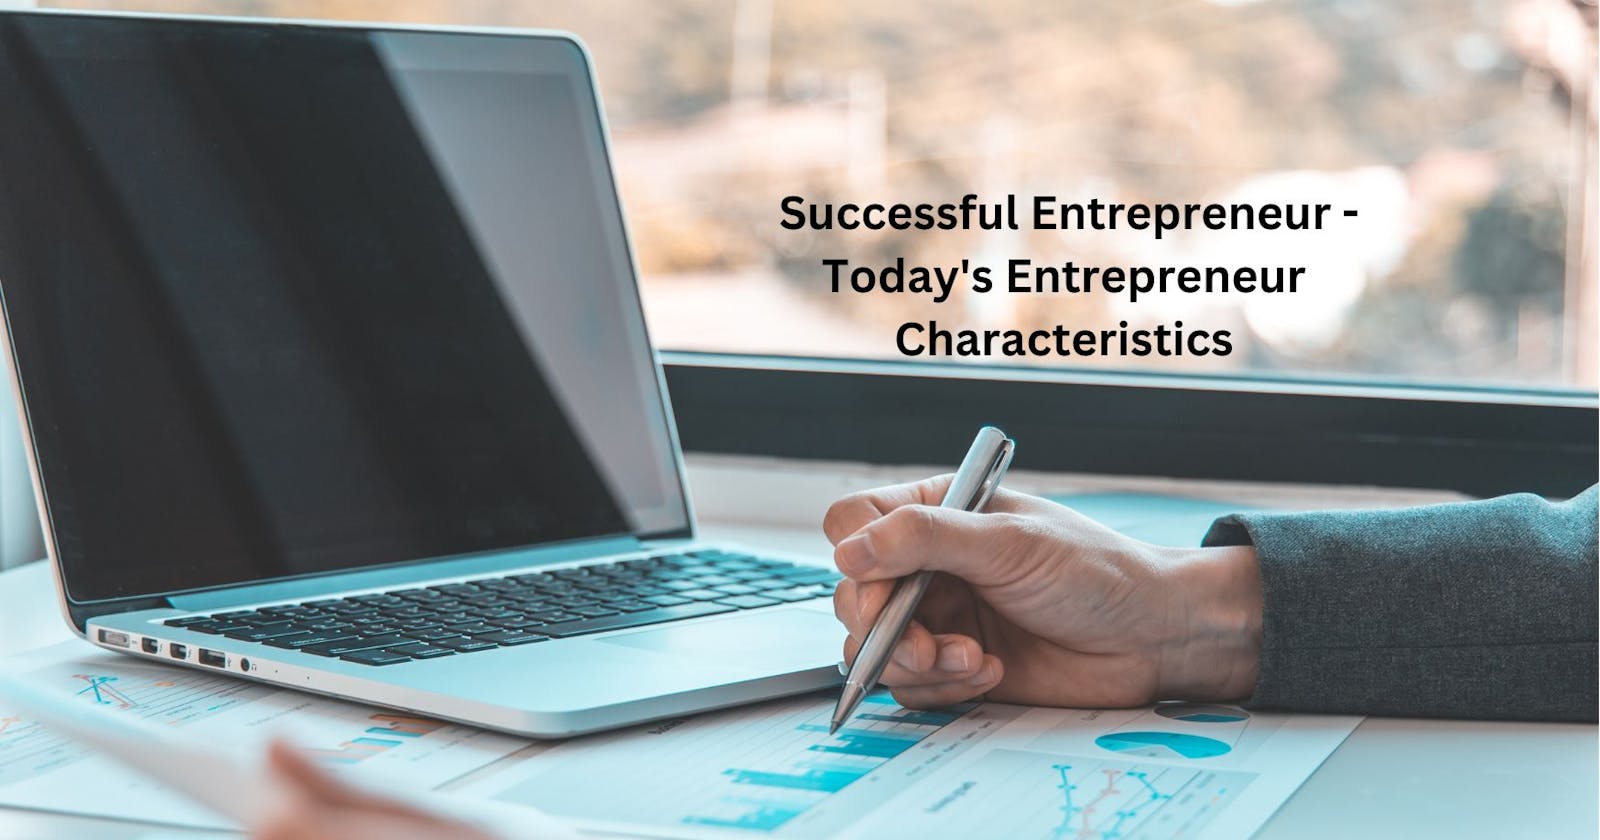 Dave Newberry - Successful Entrepreneur - Today's Entrepreneur Characteristics